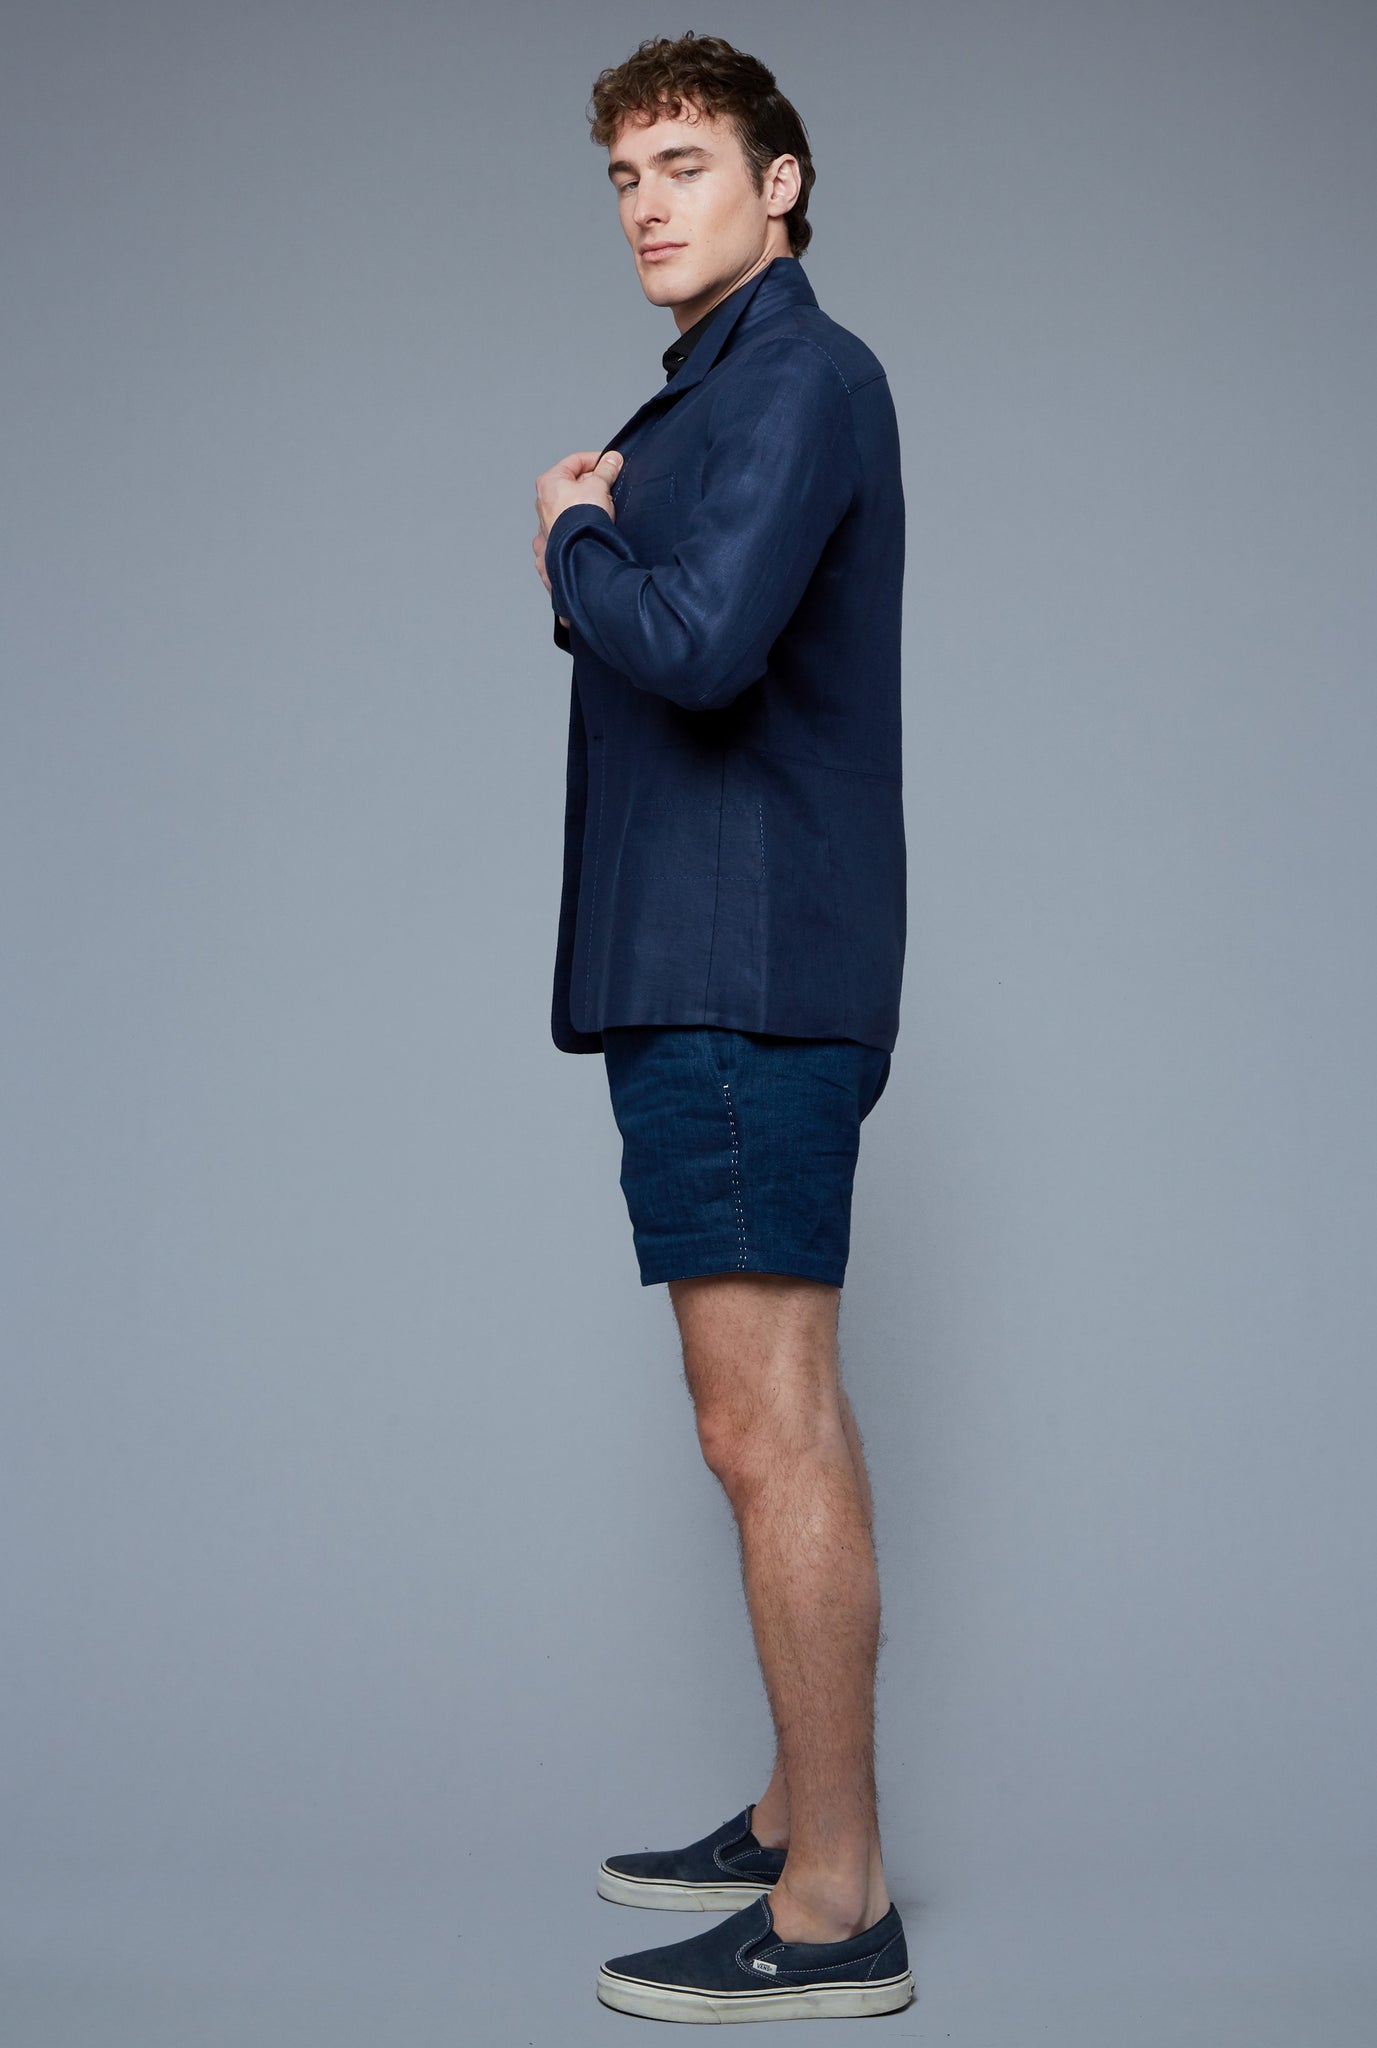 Side View: Model Hans Weiner wearing Architect's Jacket